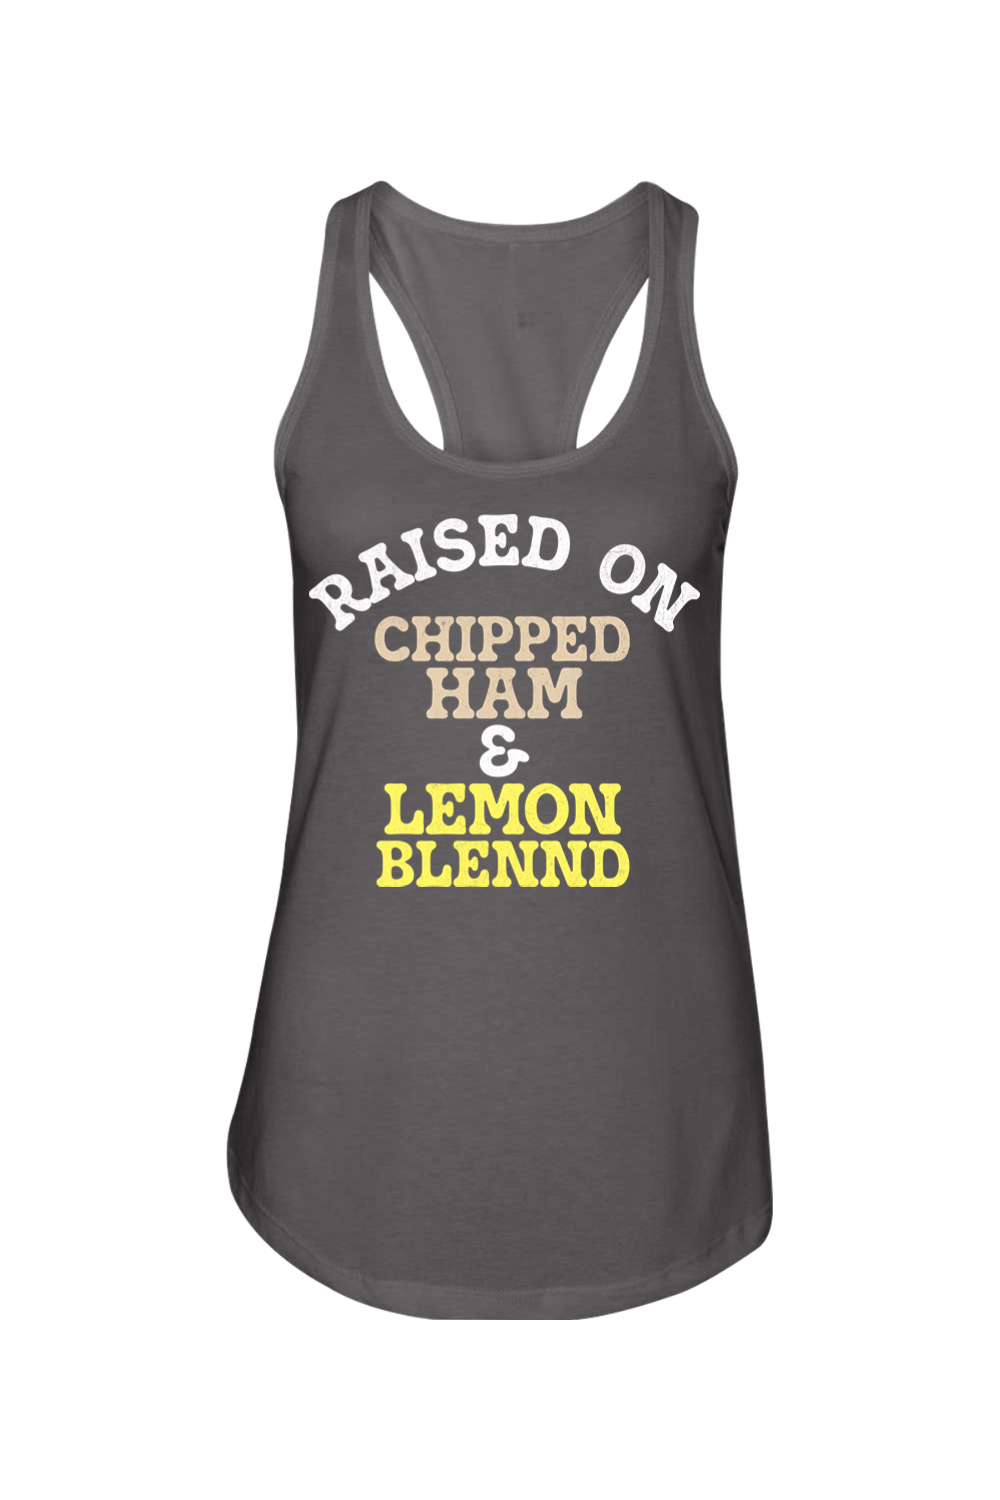 Raised on Chipped Ham & Lemon Blennd - Ladies Racerback Tank - Yinzylvania